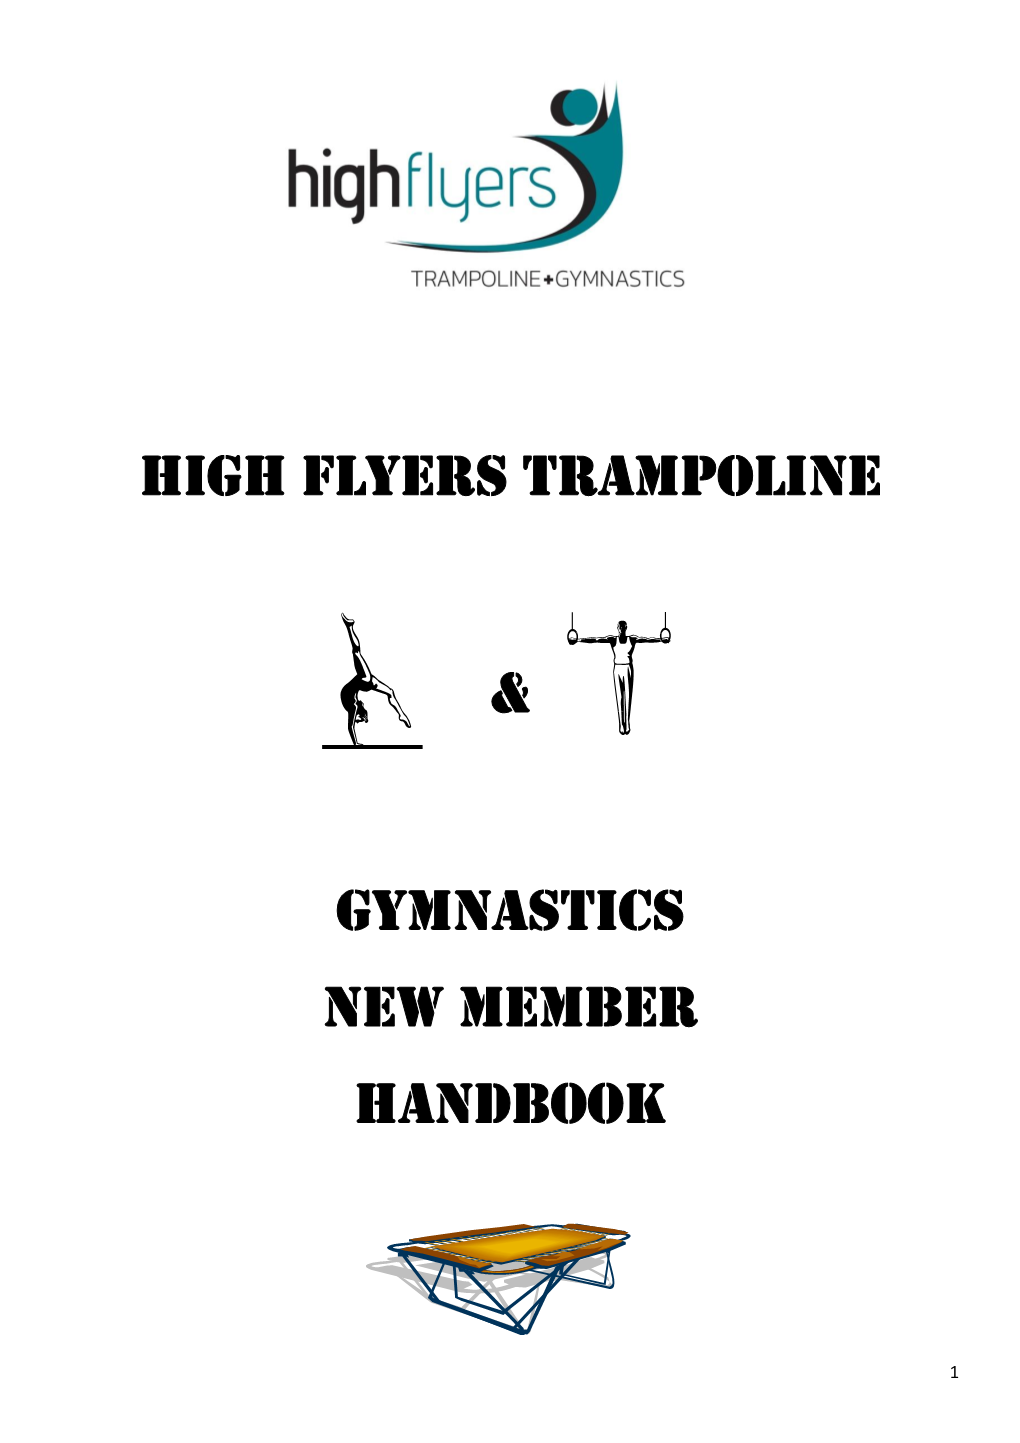 High Flyers Trampoline & Gymnastics New Member Handbook